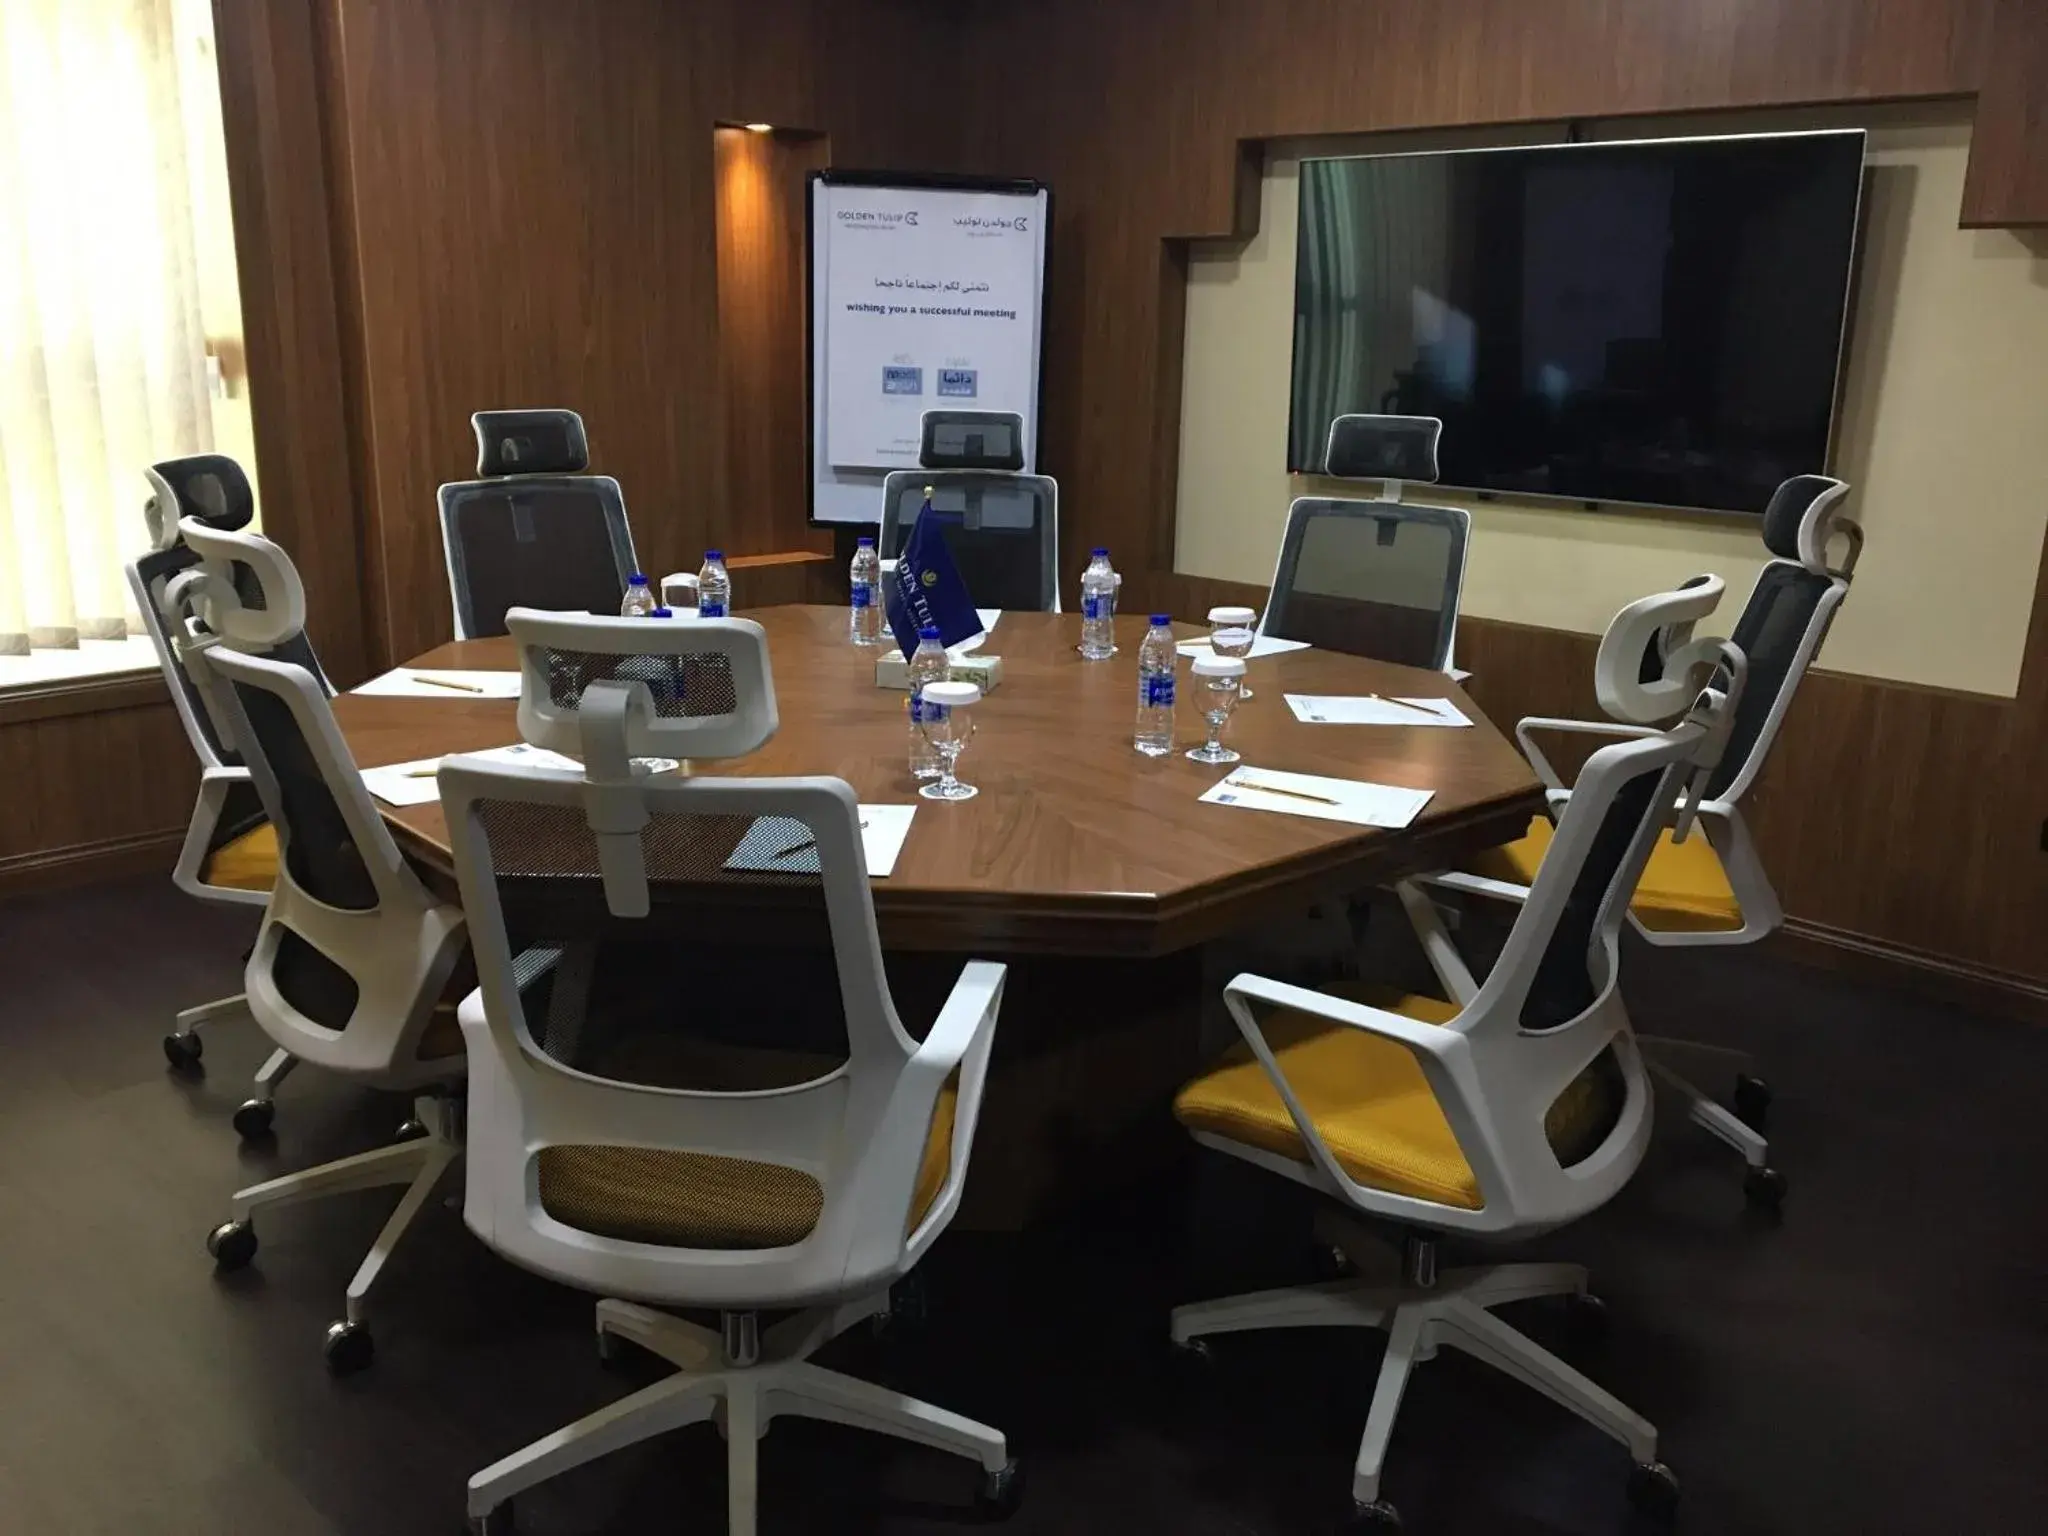 Meeting/conference room in Golden Tulip Headington